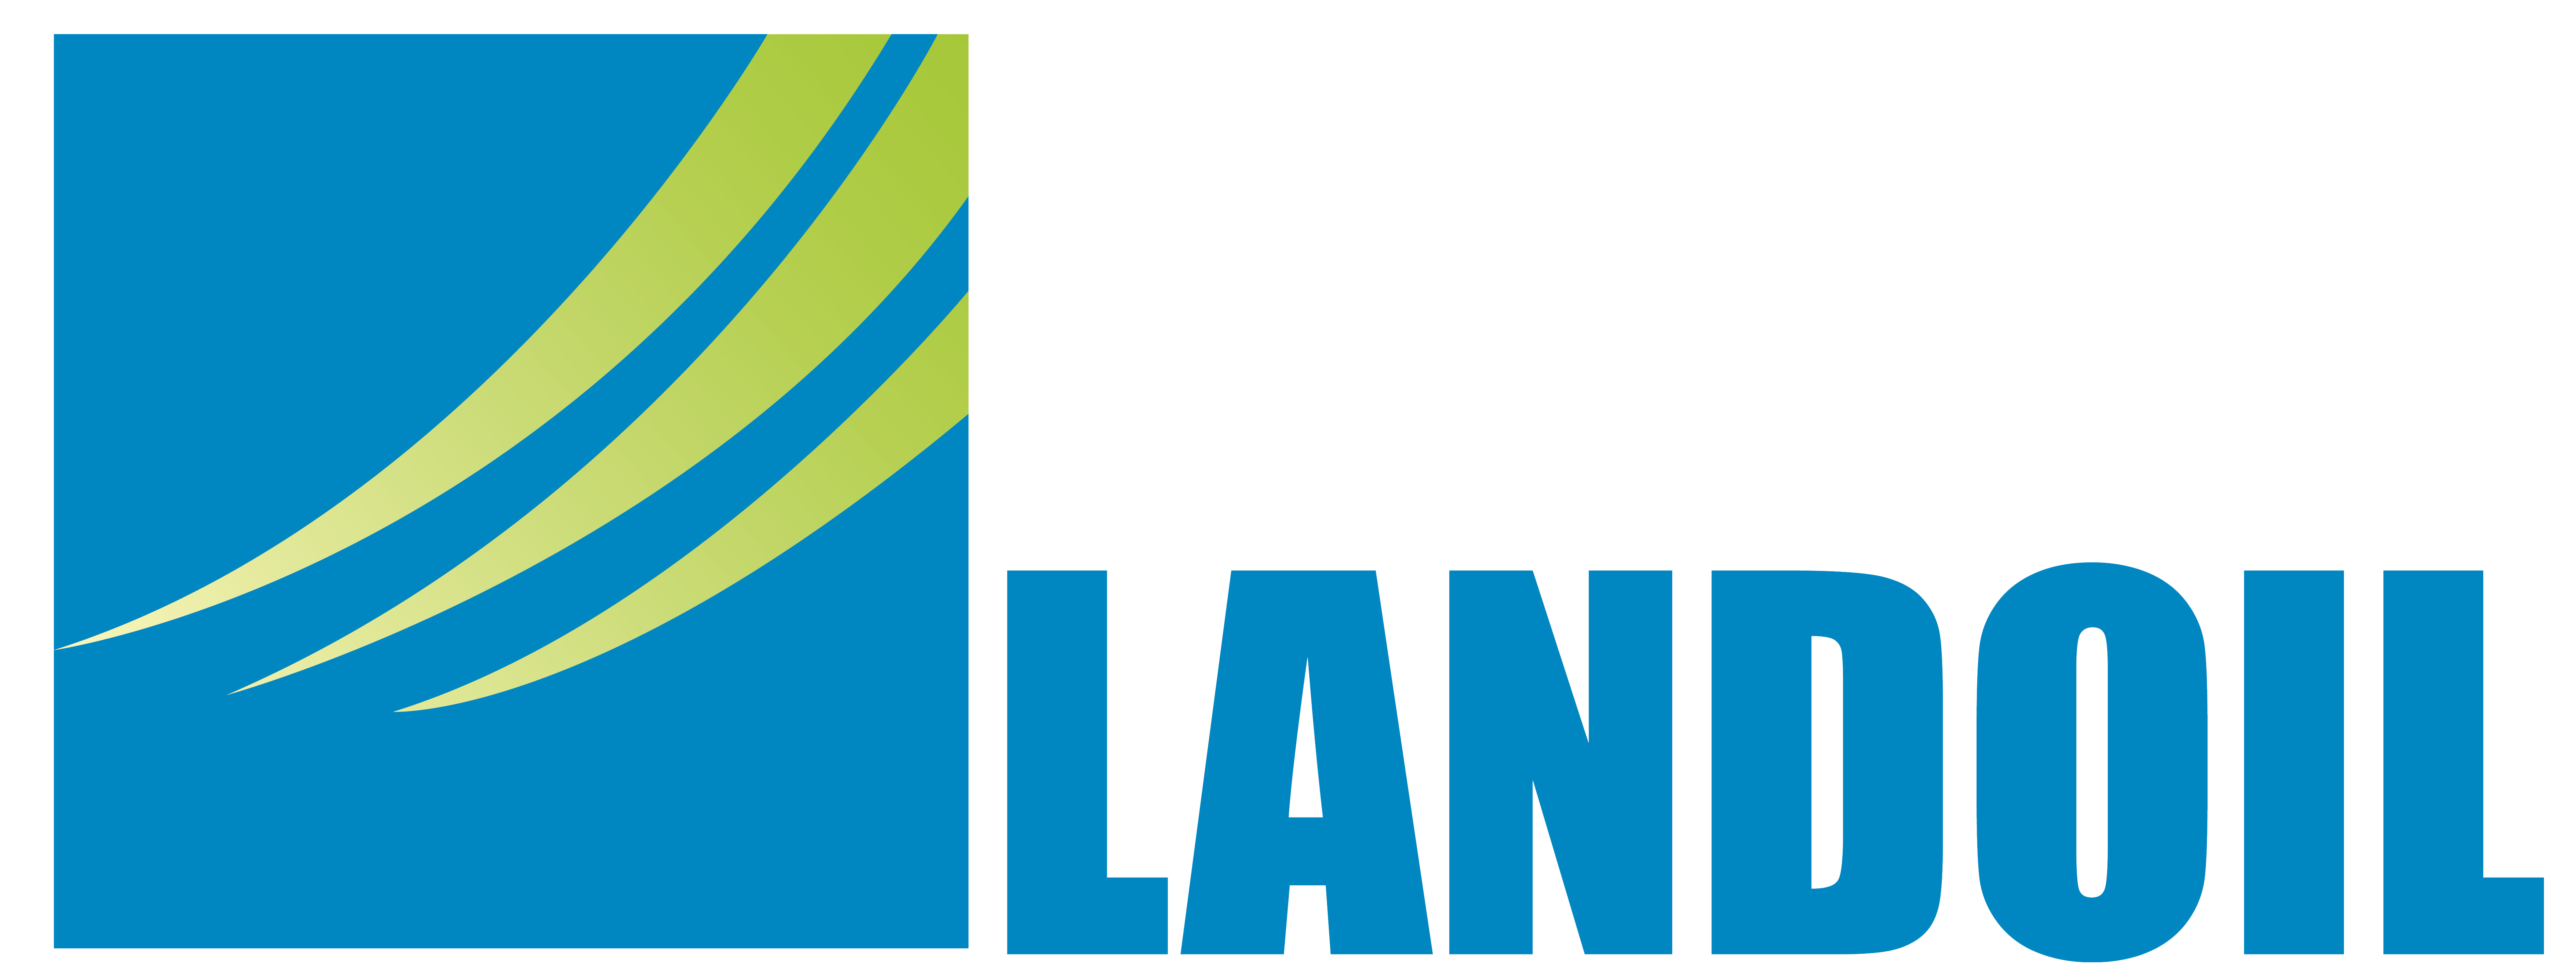 Landoil Chemical Group Co. Ltd. 